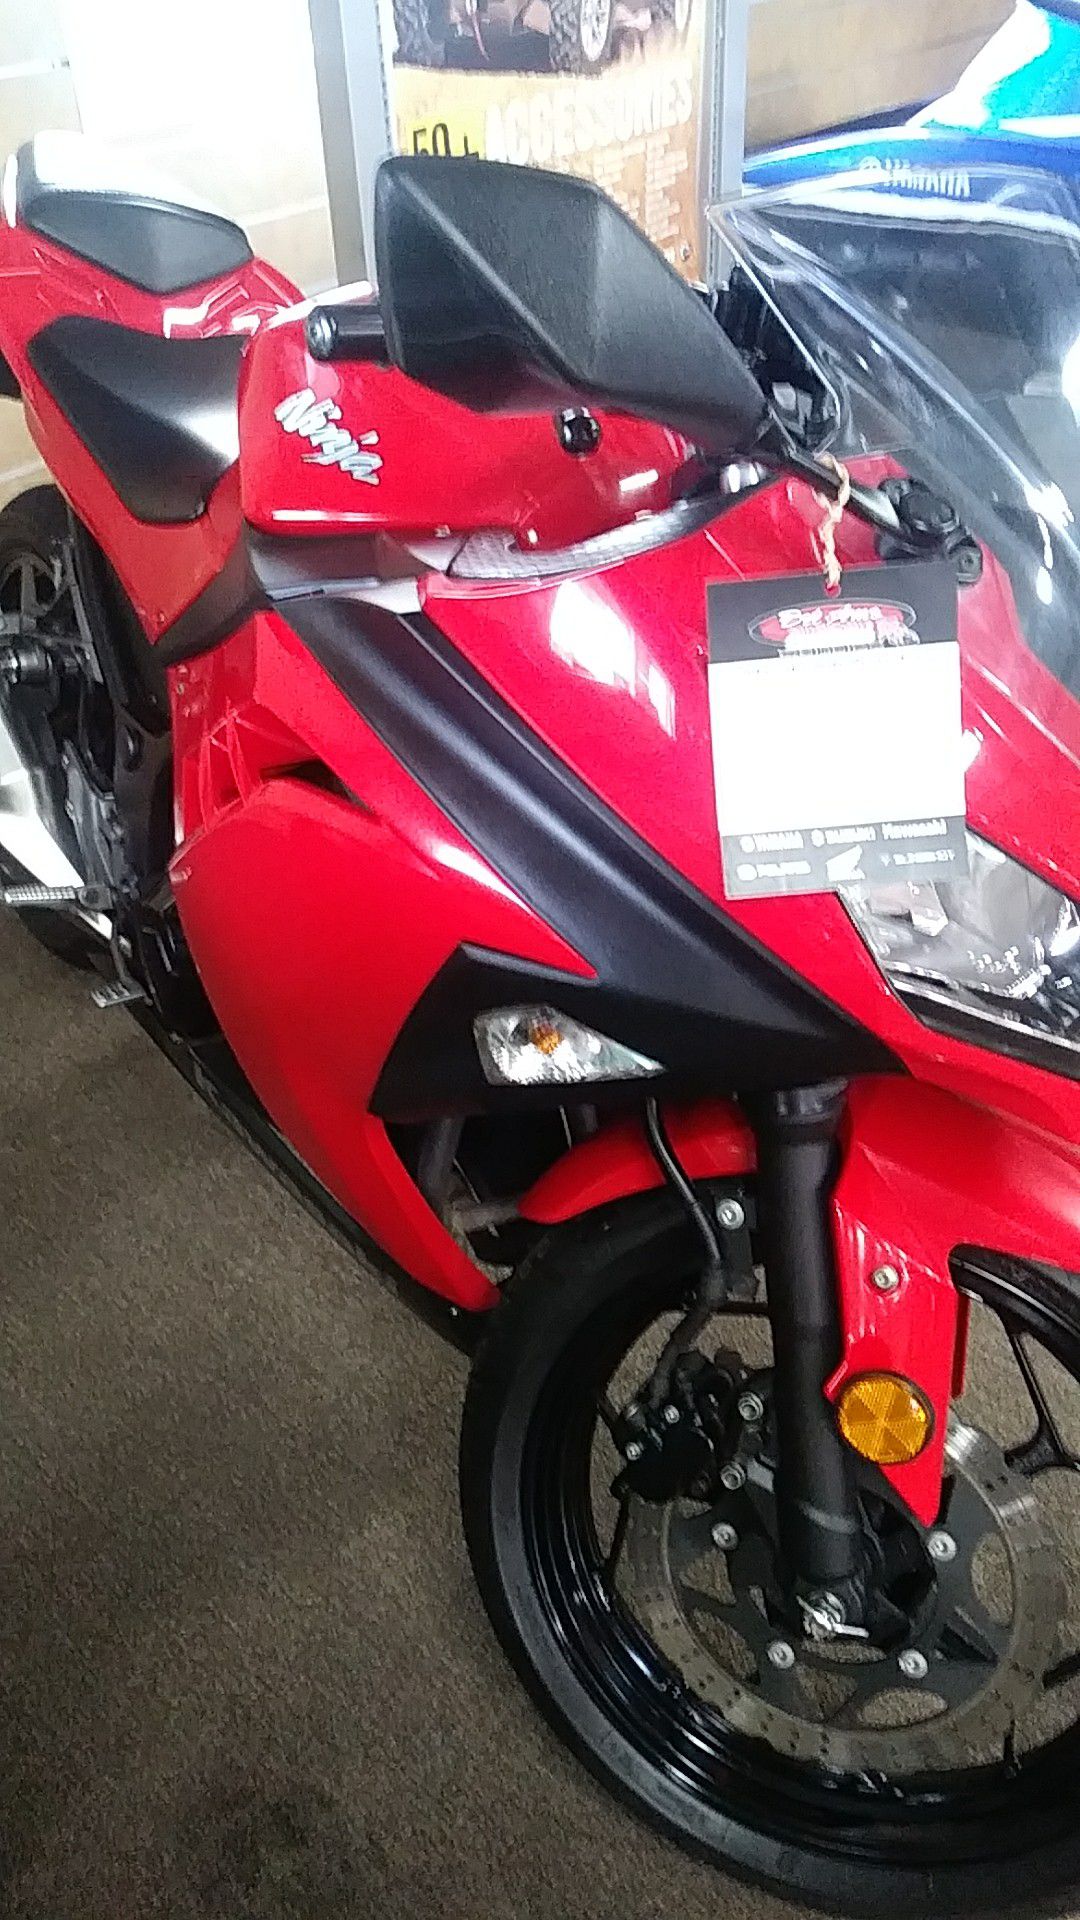 Motorcycle 2016 kawasaki ninja 300